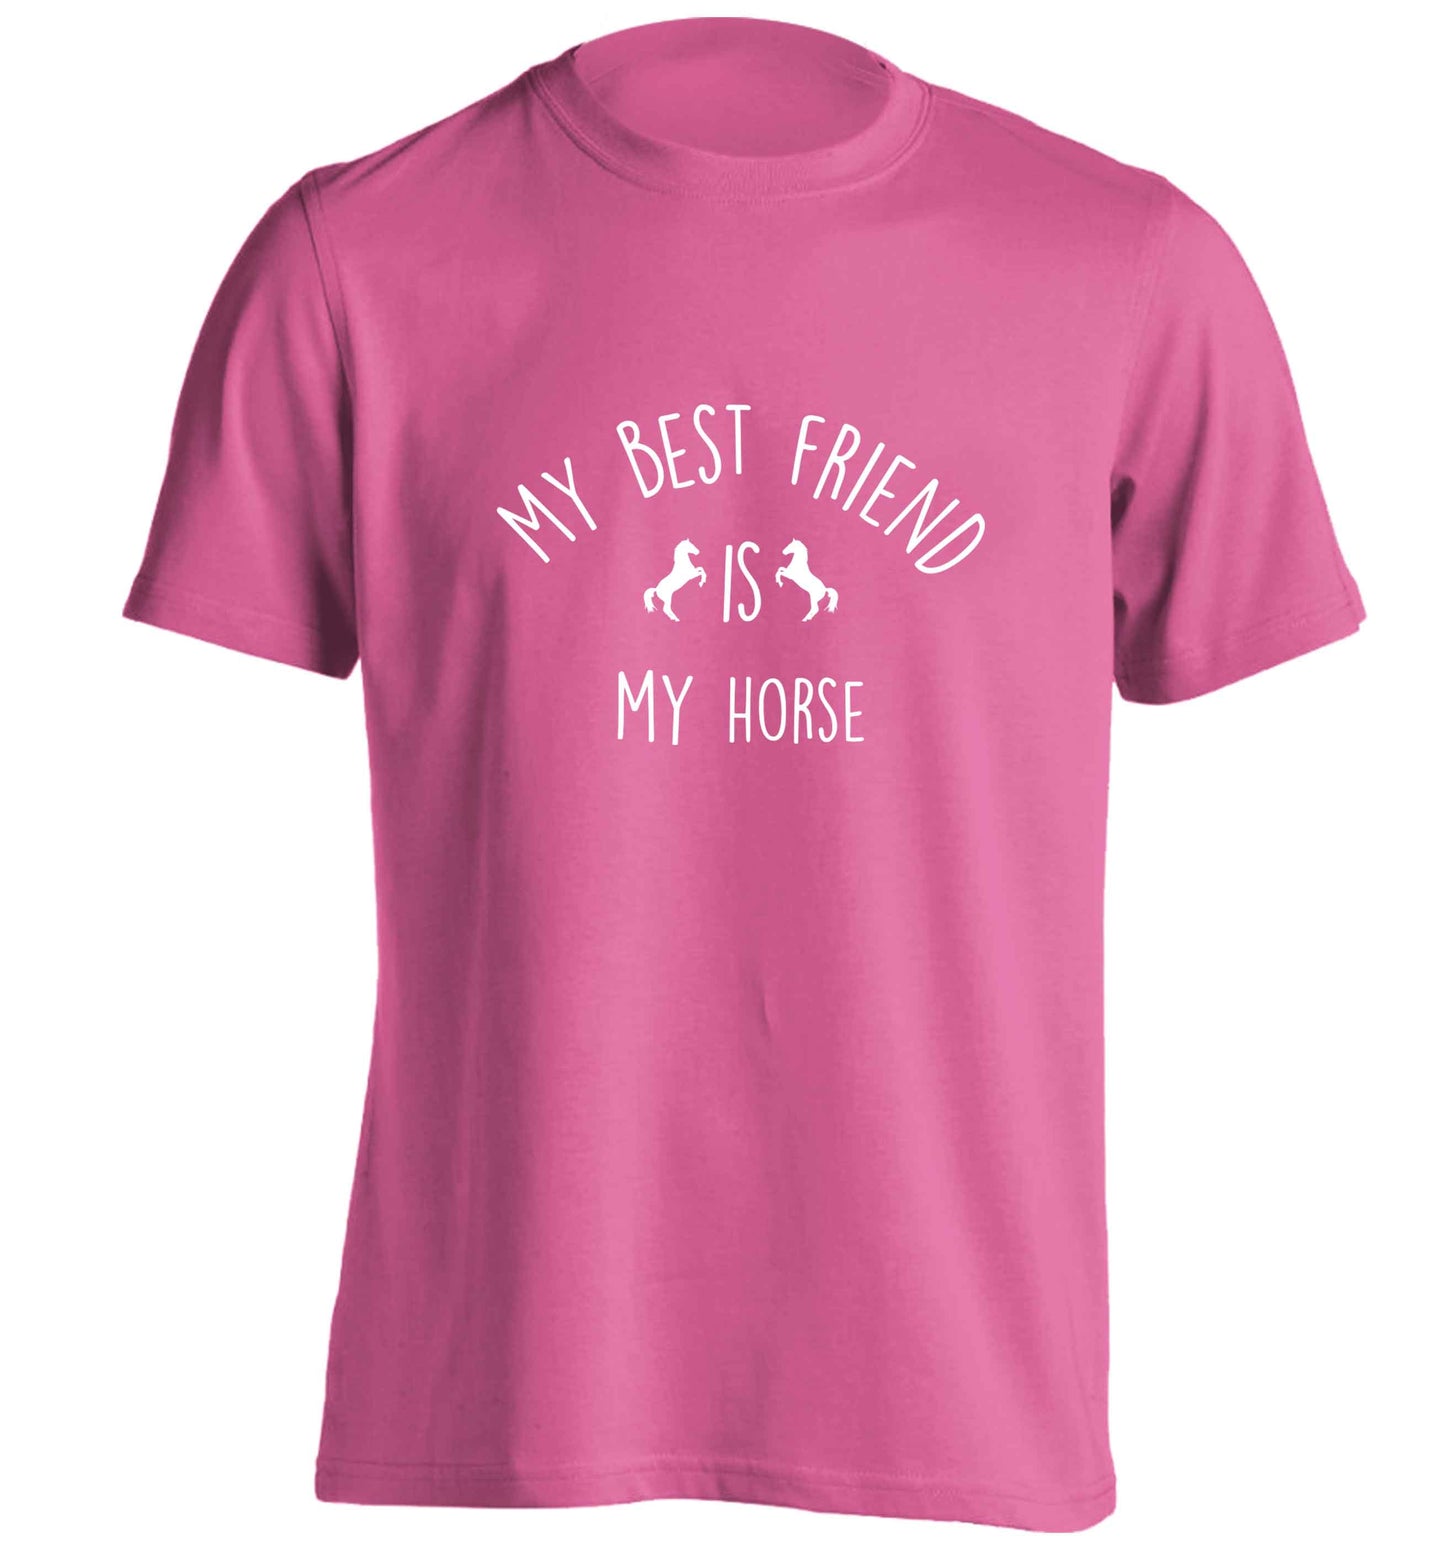 My best friend is my horse adults unisex pink Tshirt 2XL